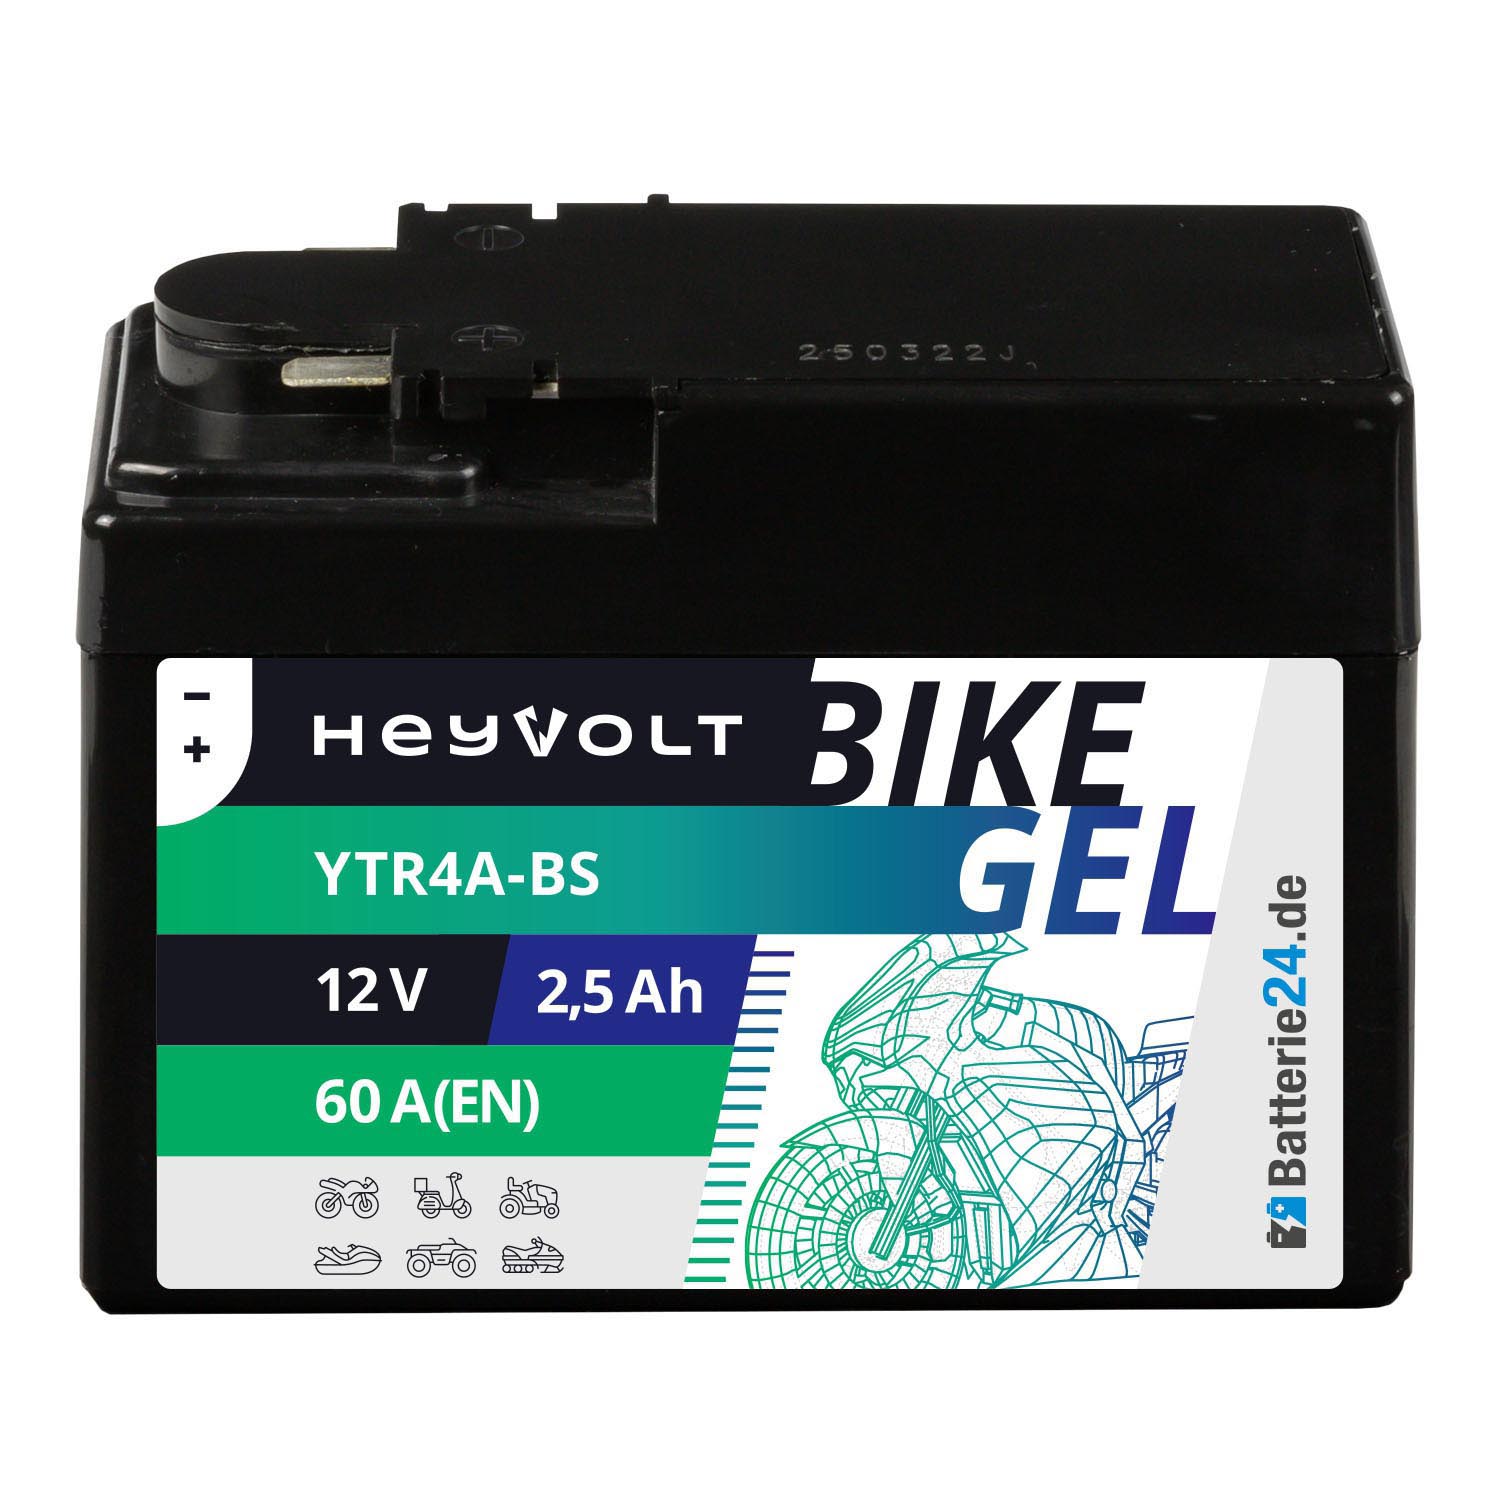 HeyVolt BIKE GEL Rollerbatterie YTR4A-BS 12V 2,5Ah